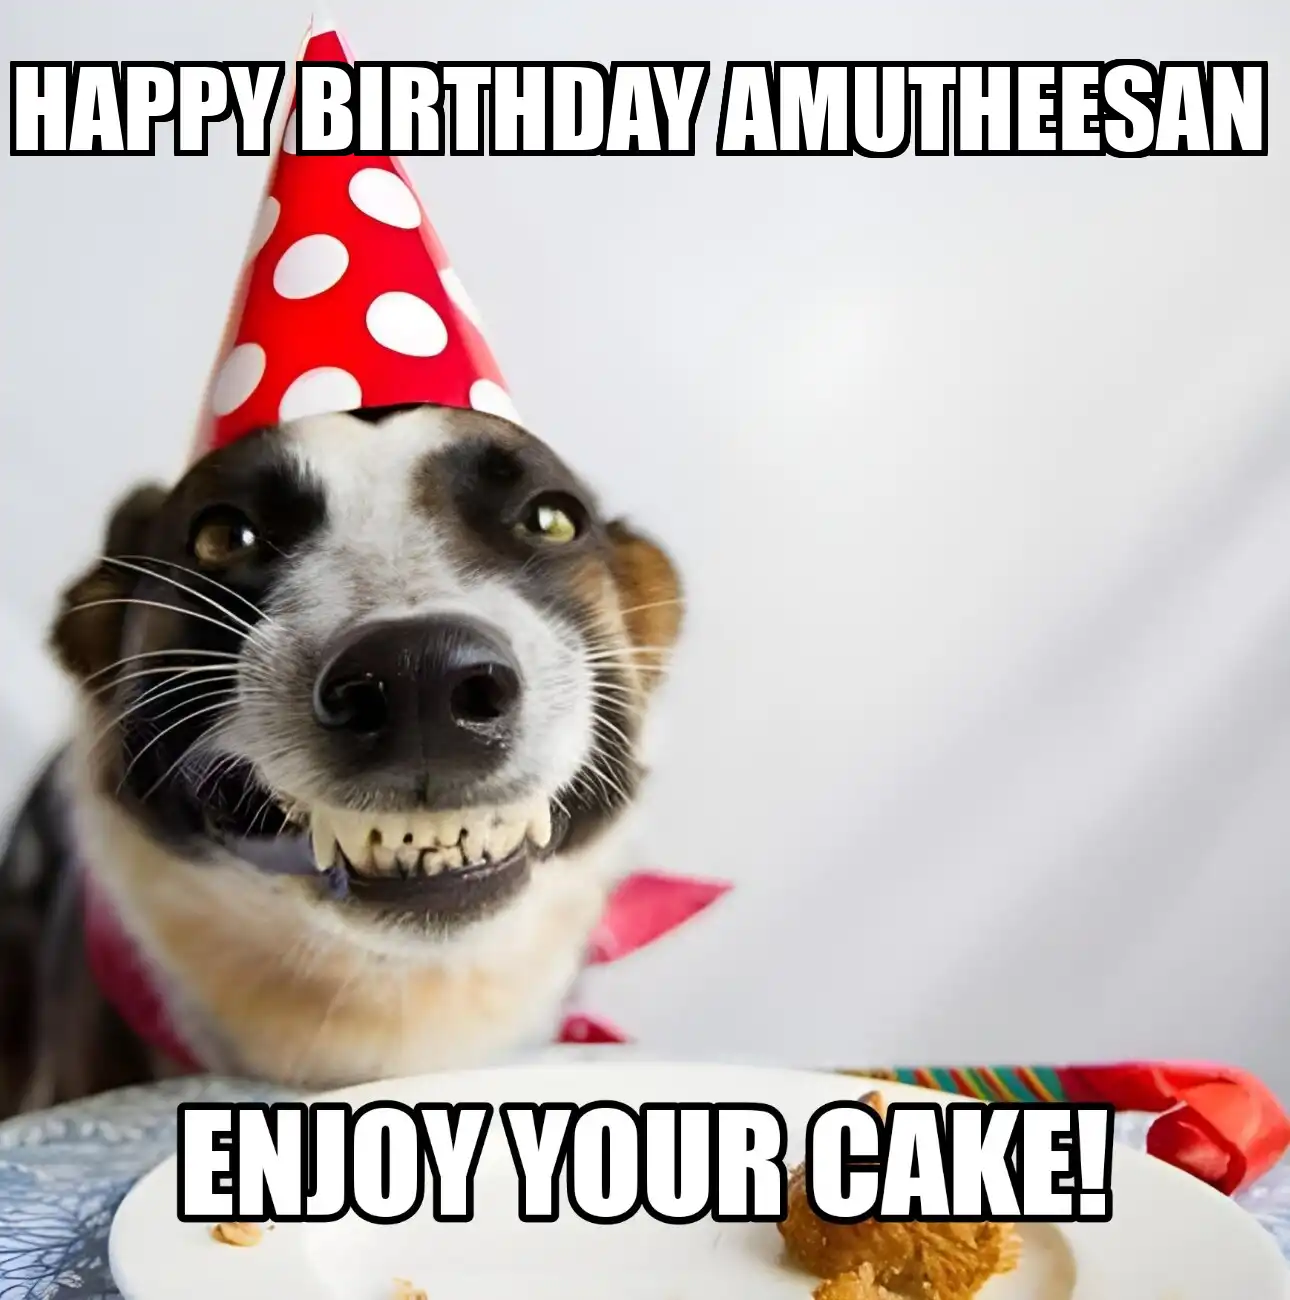 Happy Birthday Amutheesan Enjoy Your Cake Dog Meme